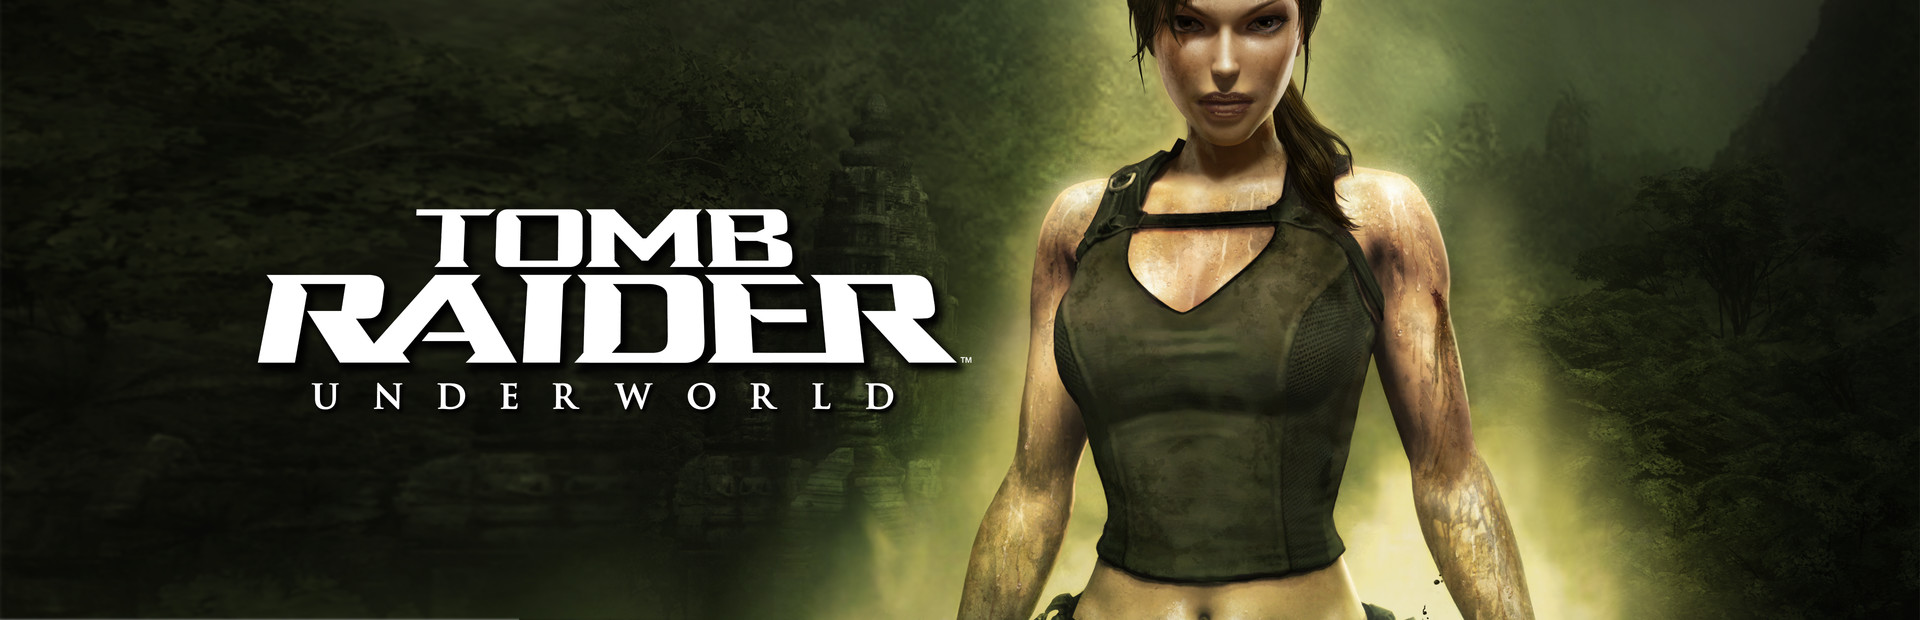 Tomb Raider: Underworld cover image